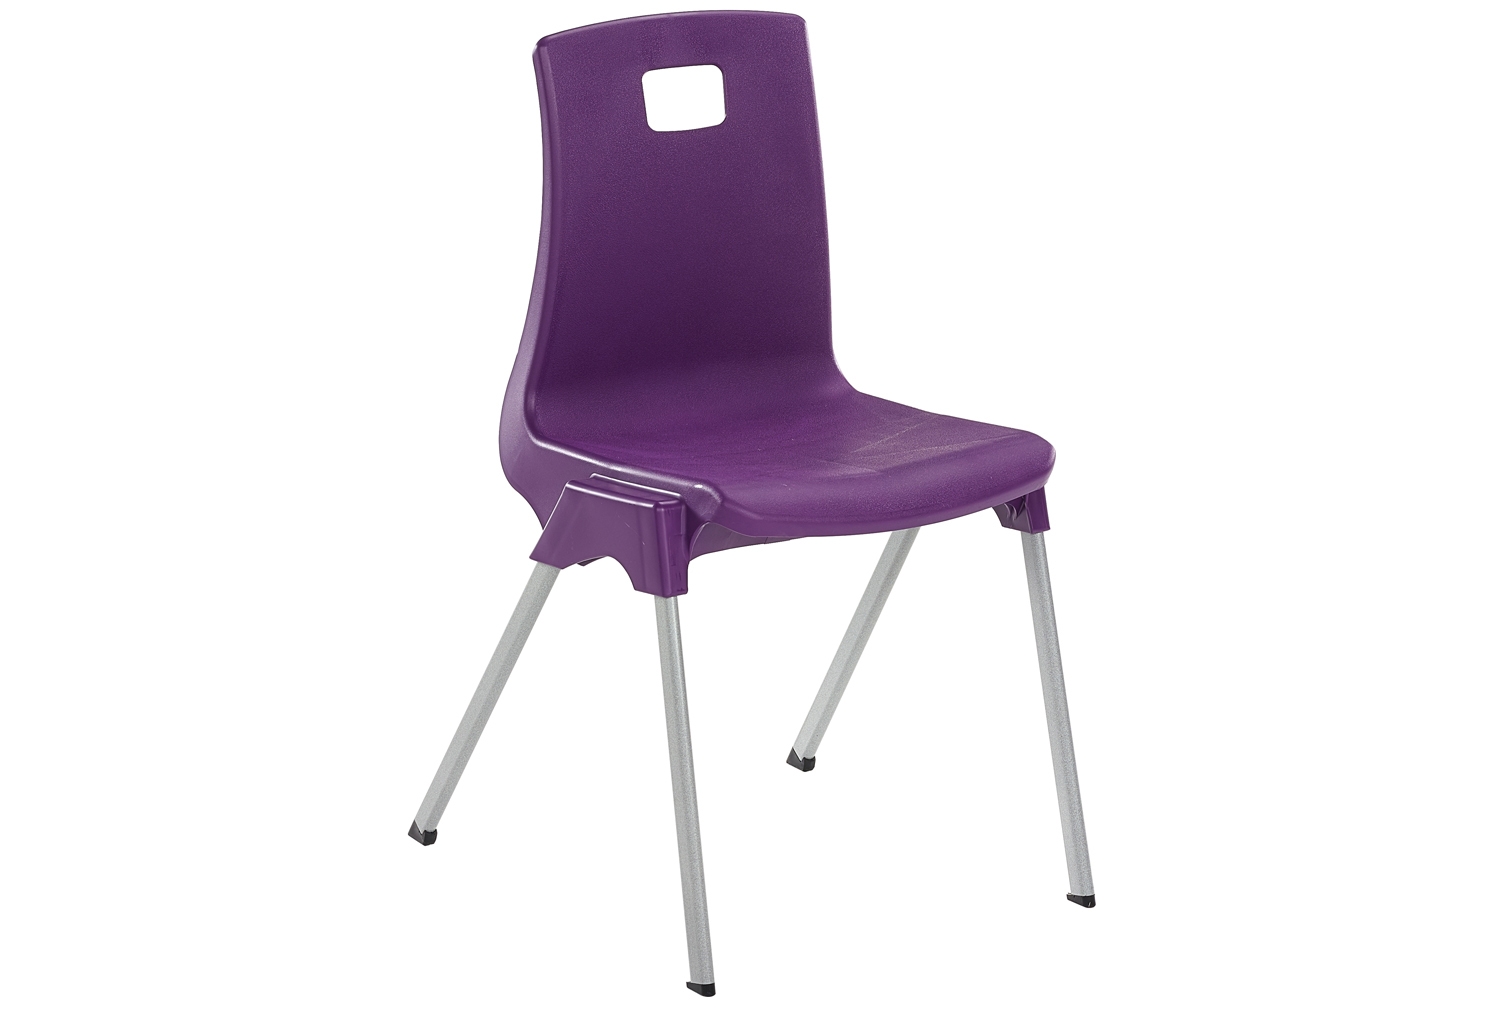 Qty 11 - Metalliform ST Classroom Chair, 14+ Years - 39wx40dx46h (cm), Grey Frame, Charcoal